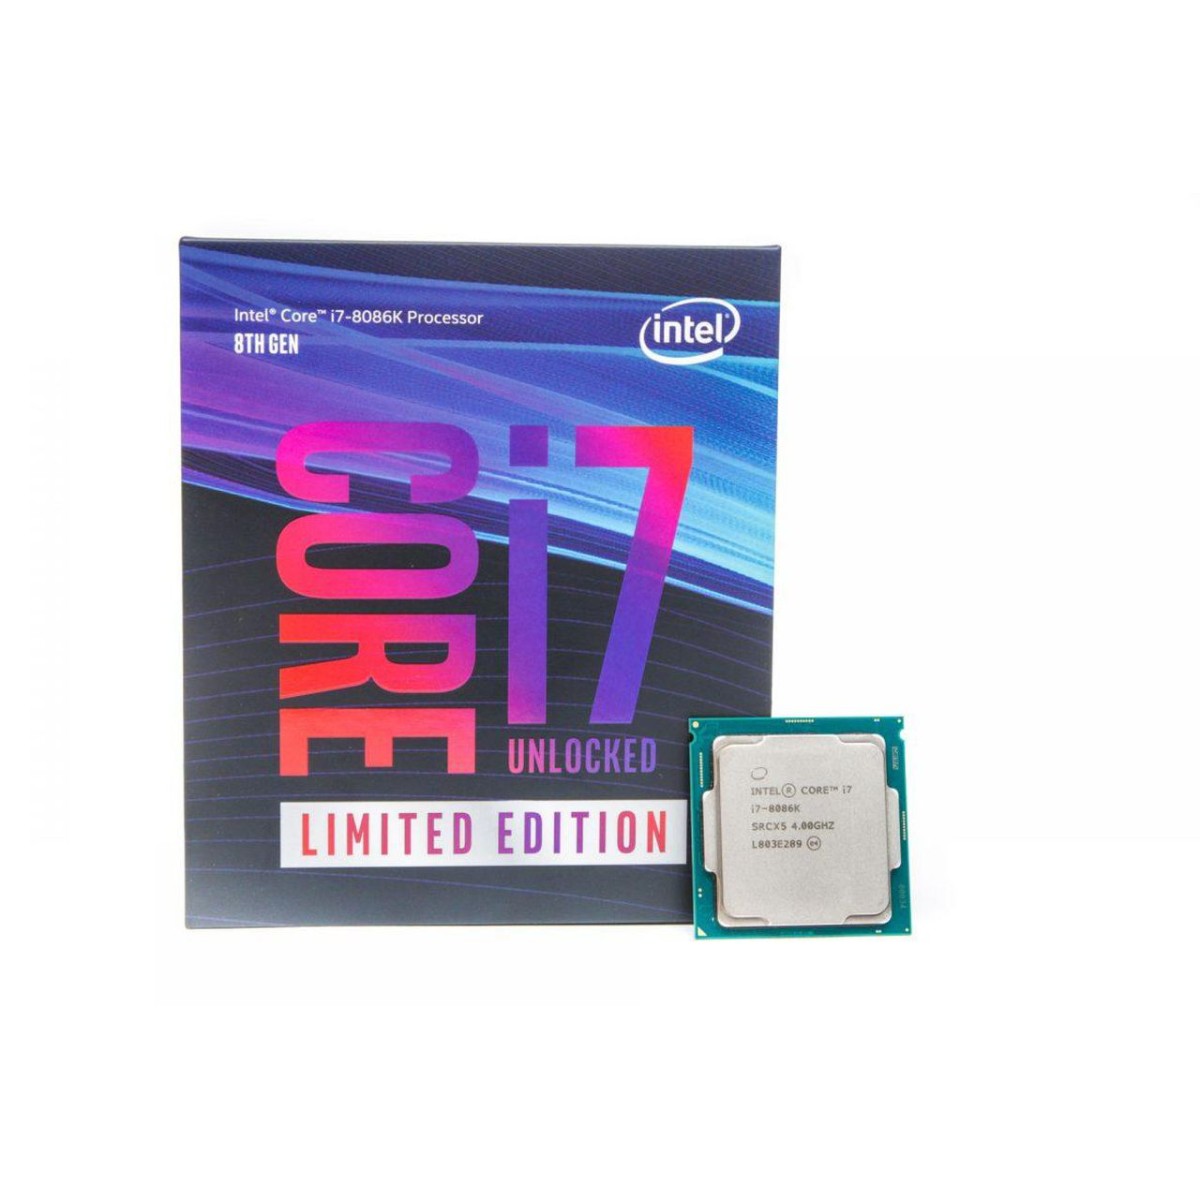 Intel Core i7 8086K Processor 8th Gen Limited-Edition